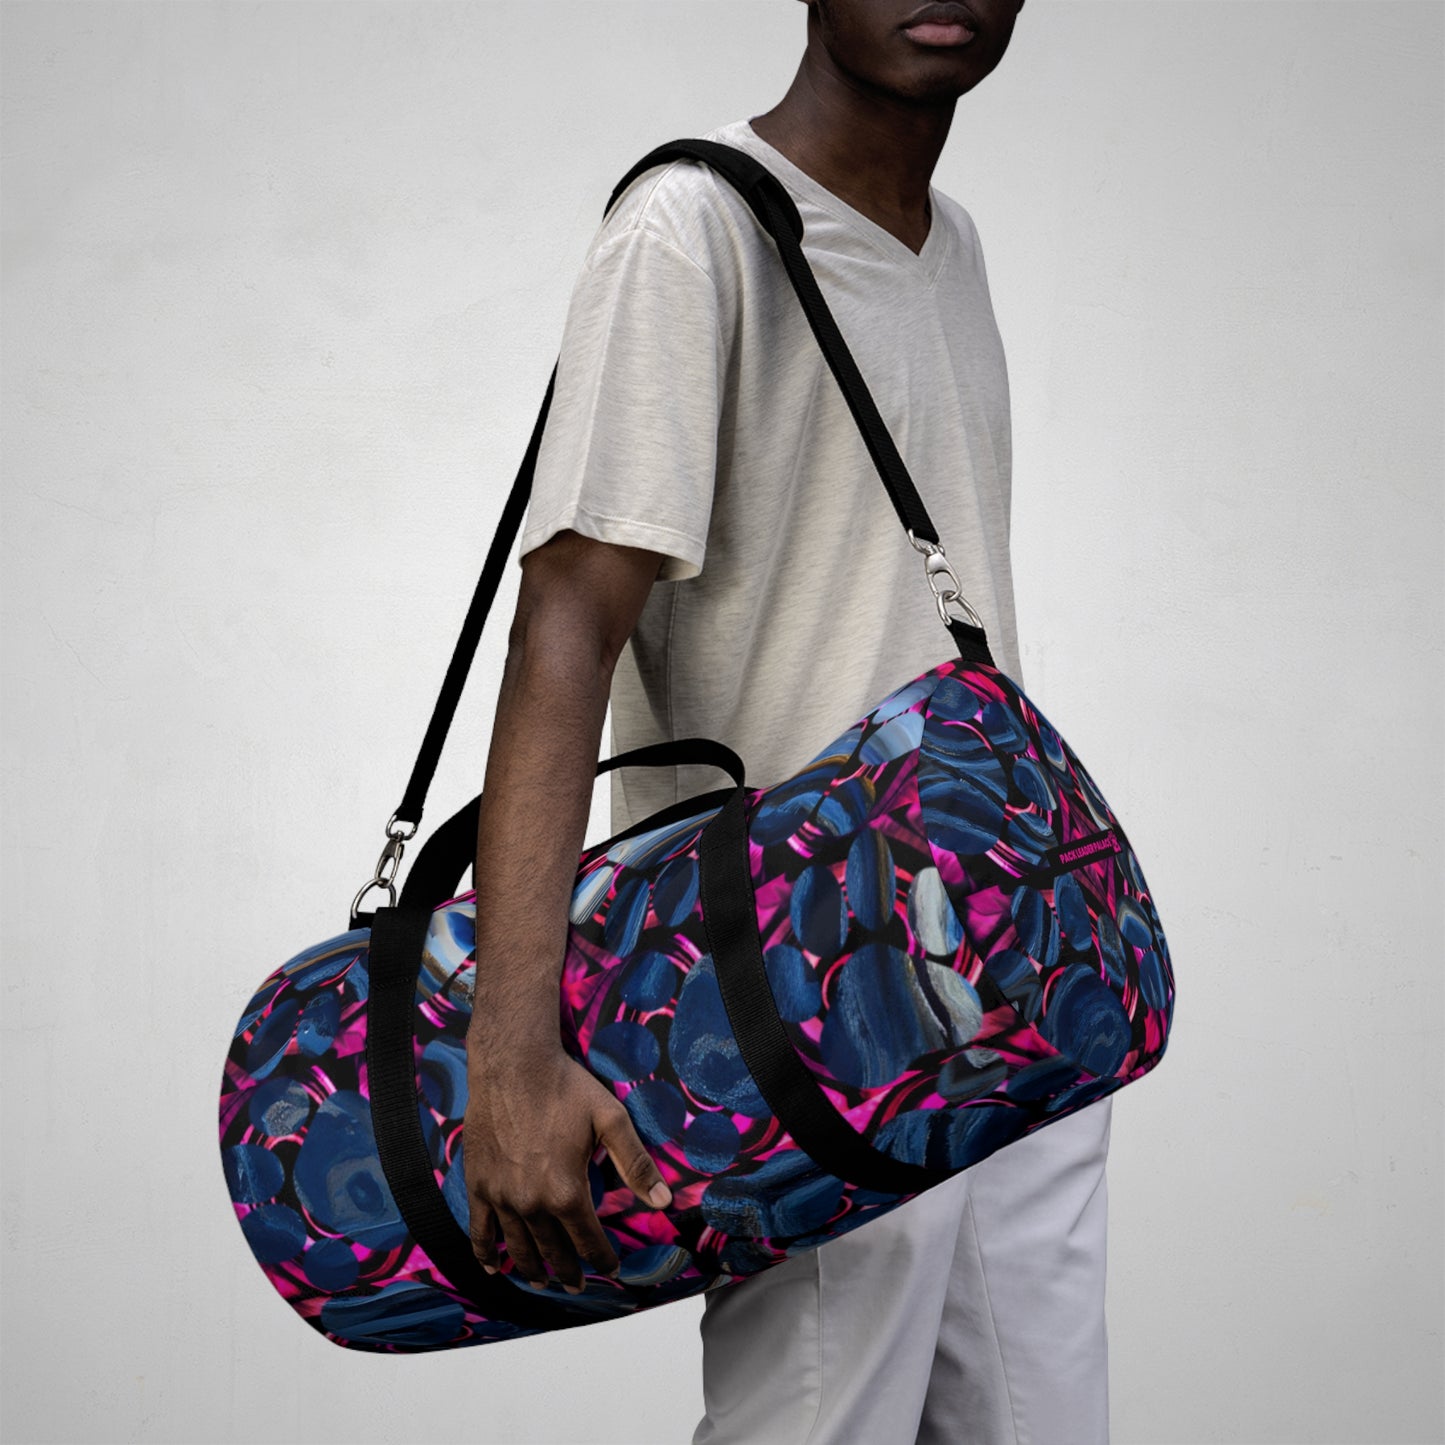 Marcelle Monet - Paw Print - Duffel Bag